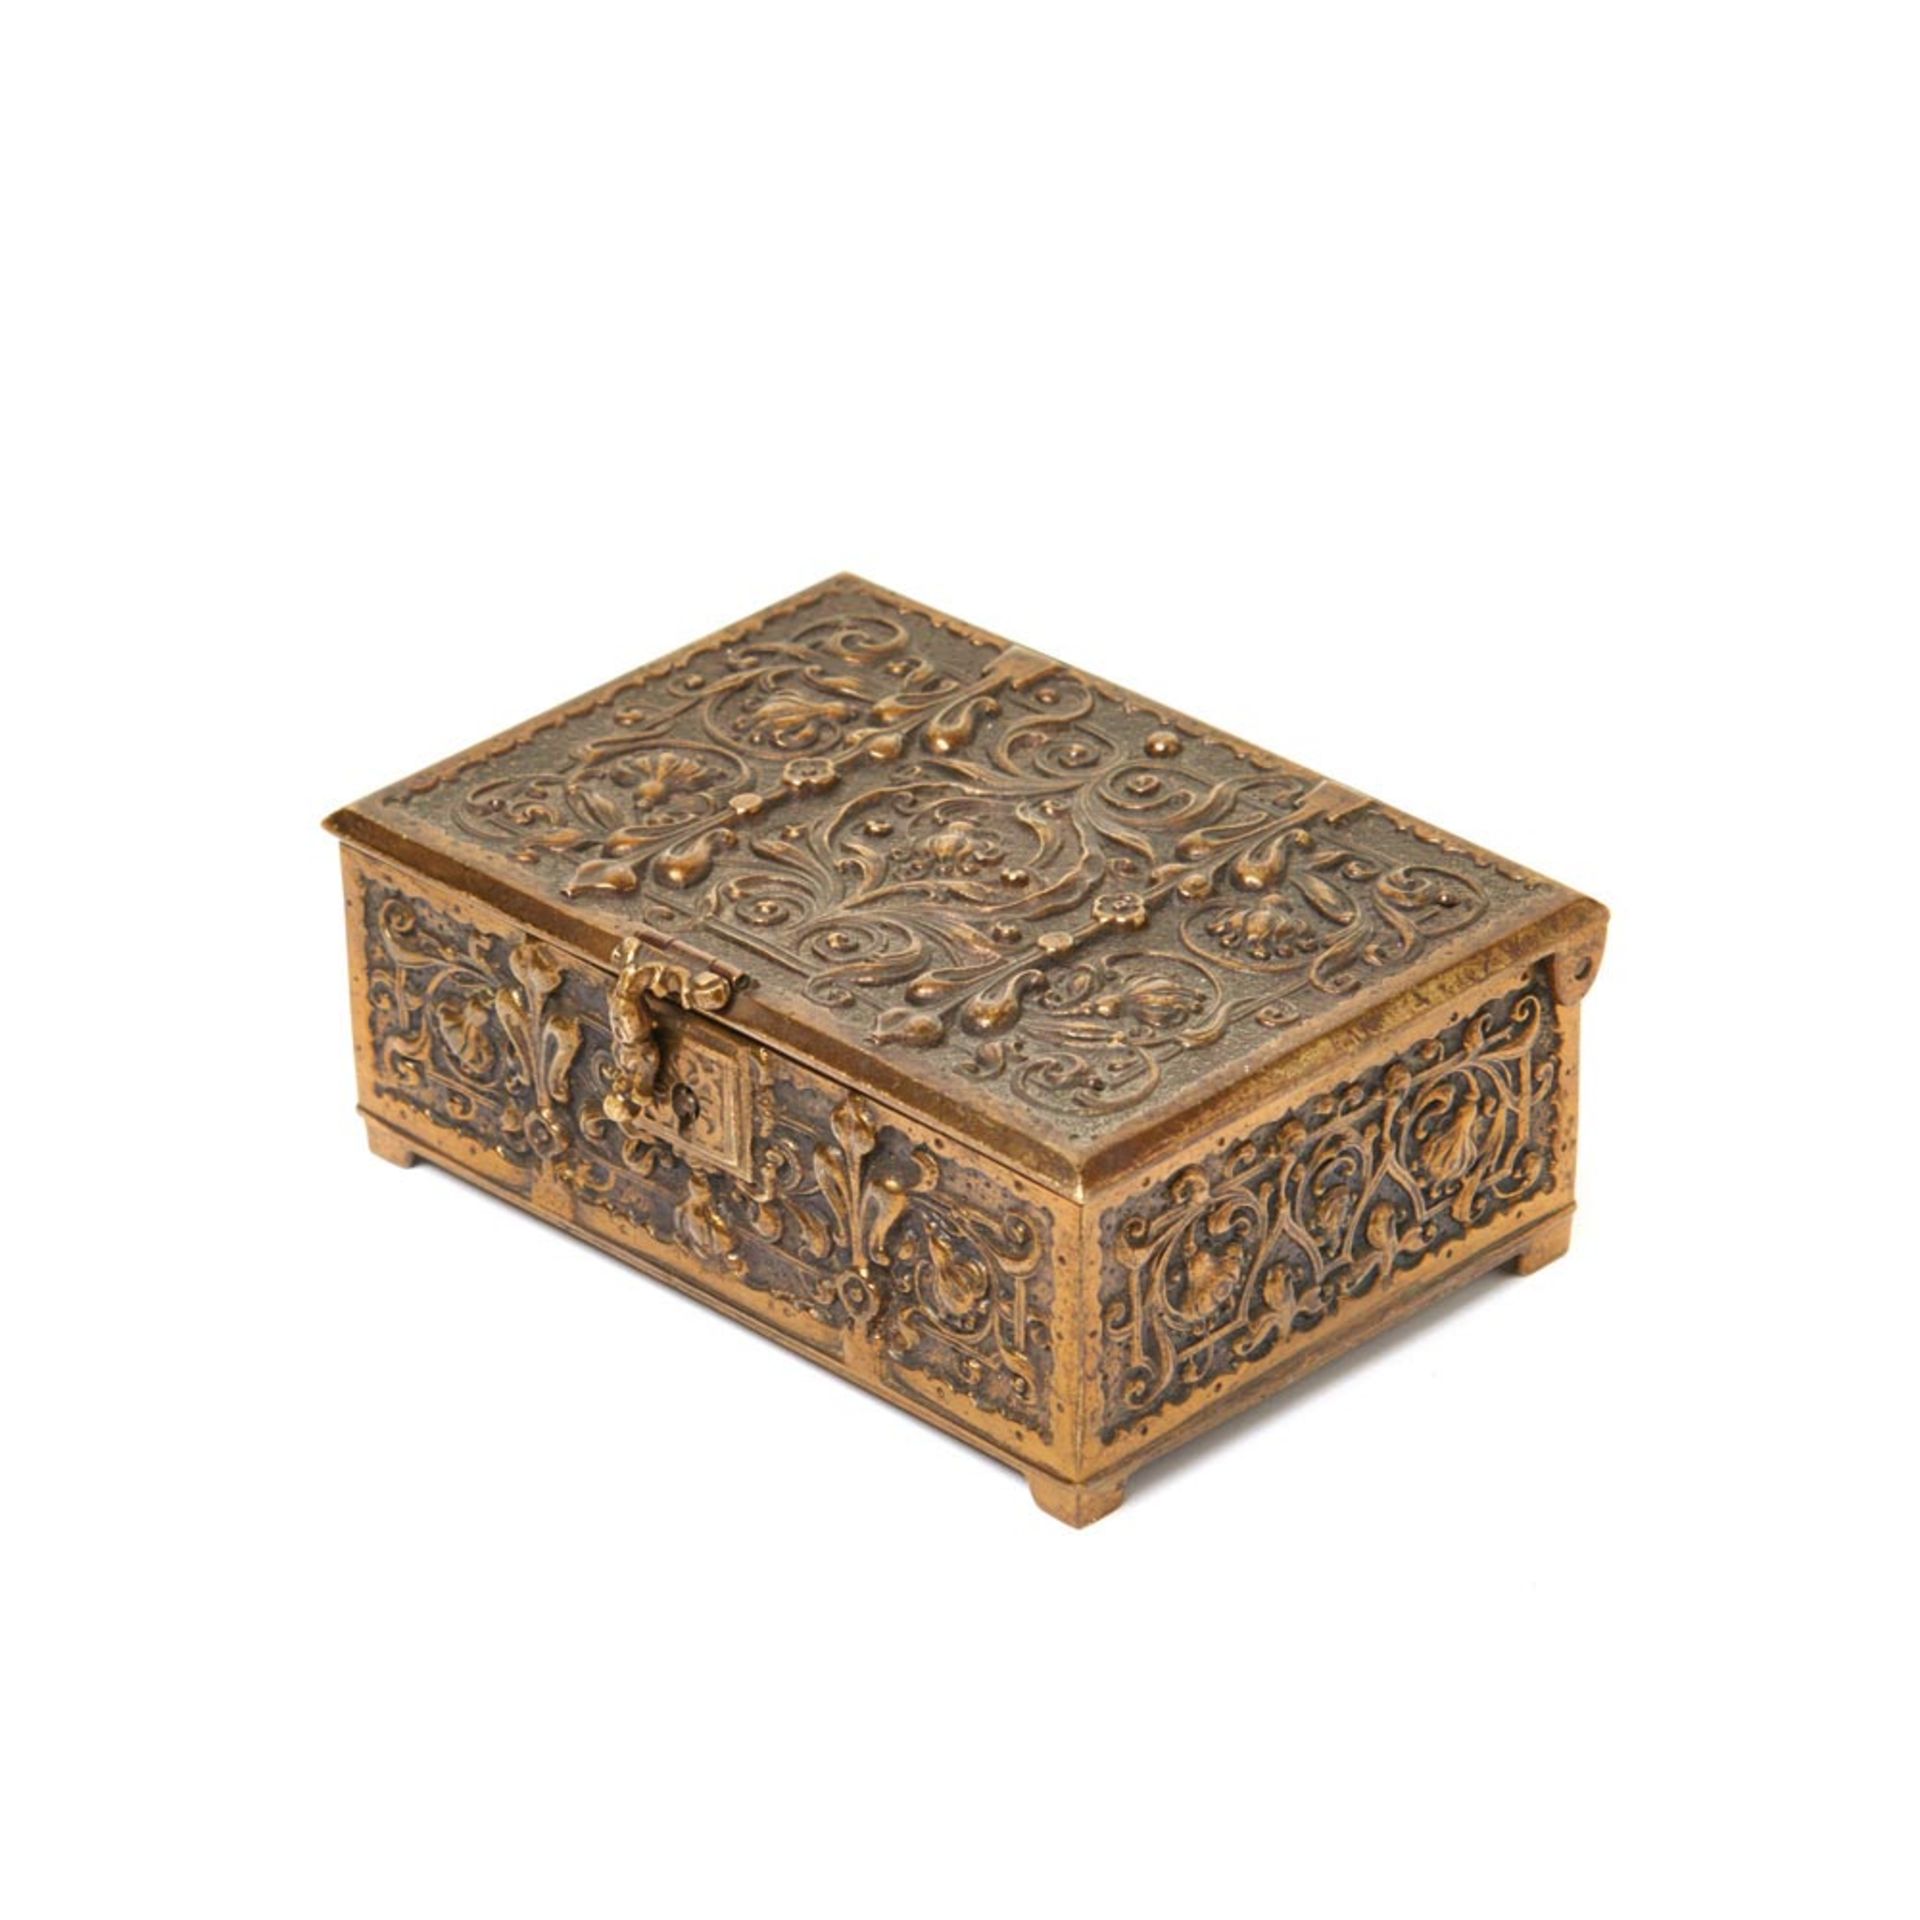 Modernist bronze box early 20th century